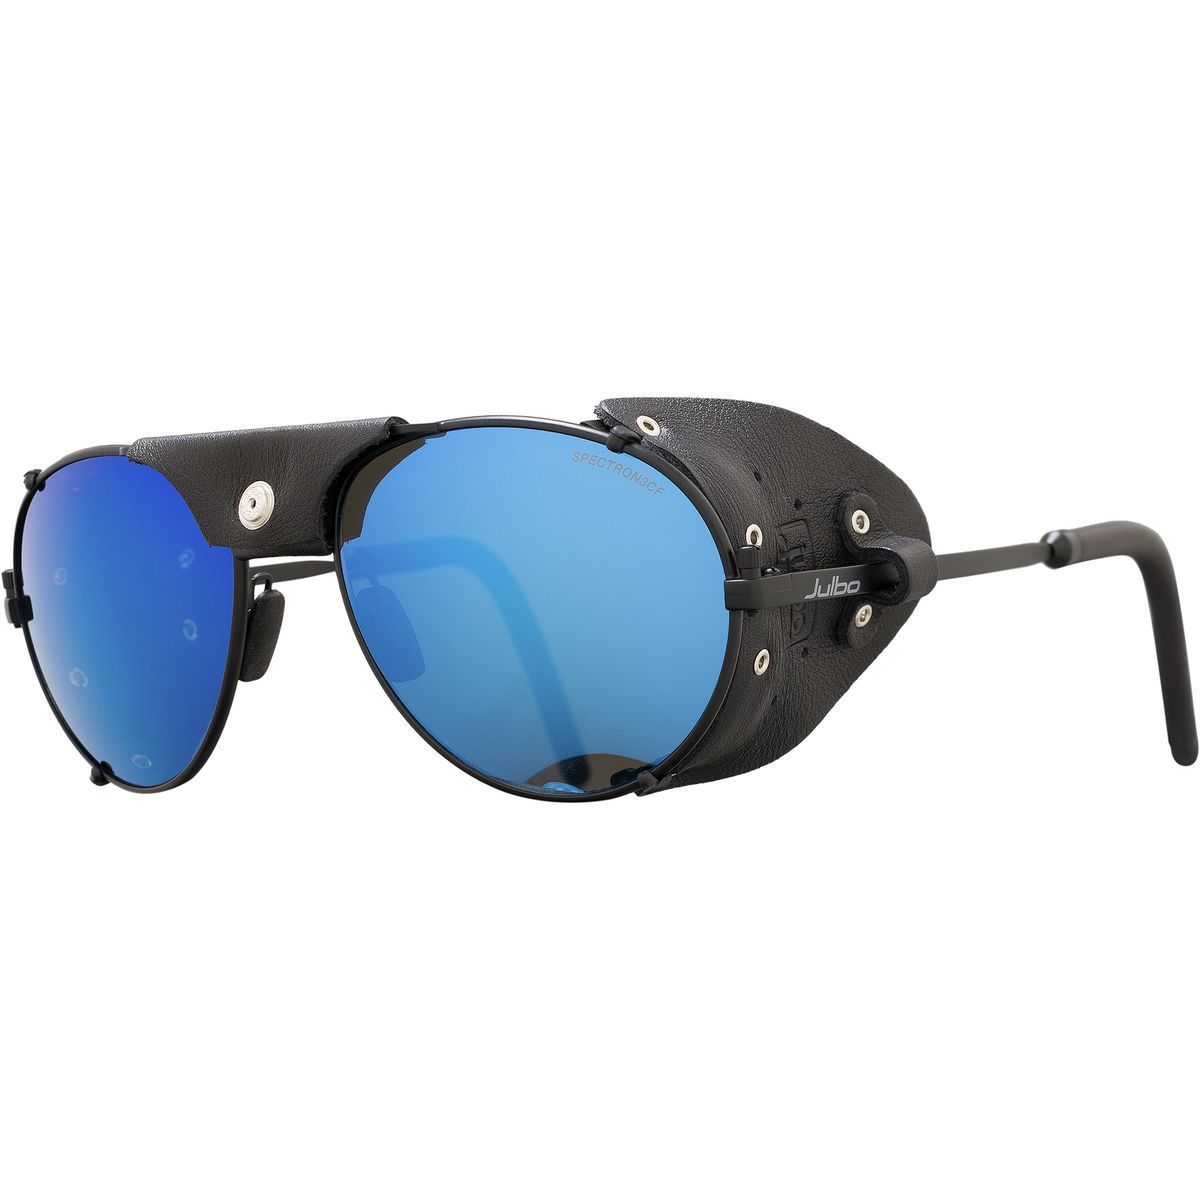 Julbo Cham Spectron 3 Sunglasses Matte Black/Black - Grey/Multilayer Blue, One Size - Men's